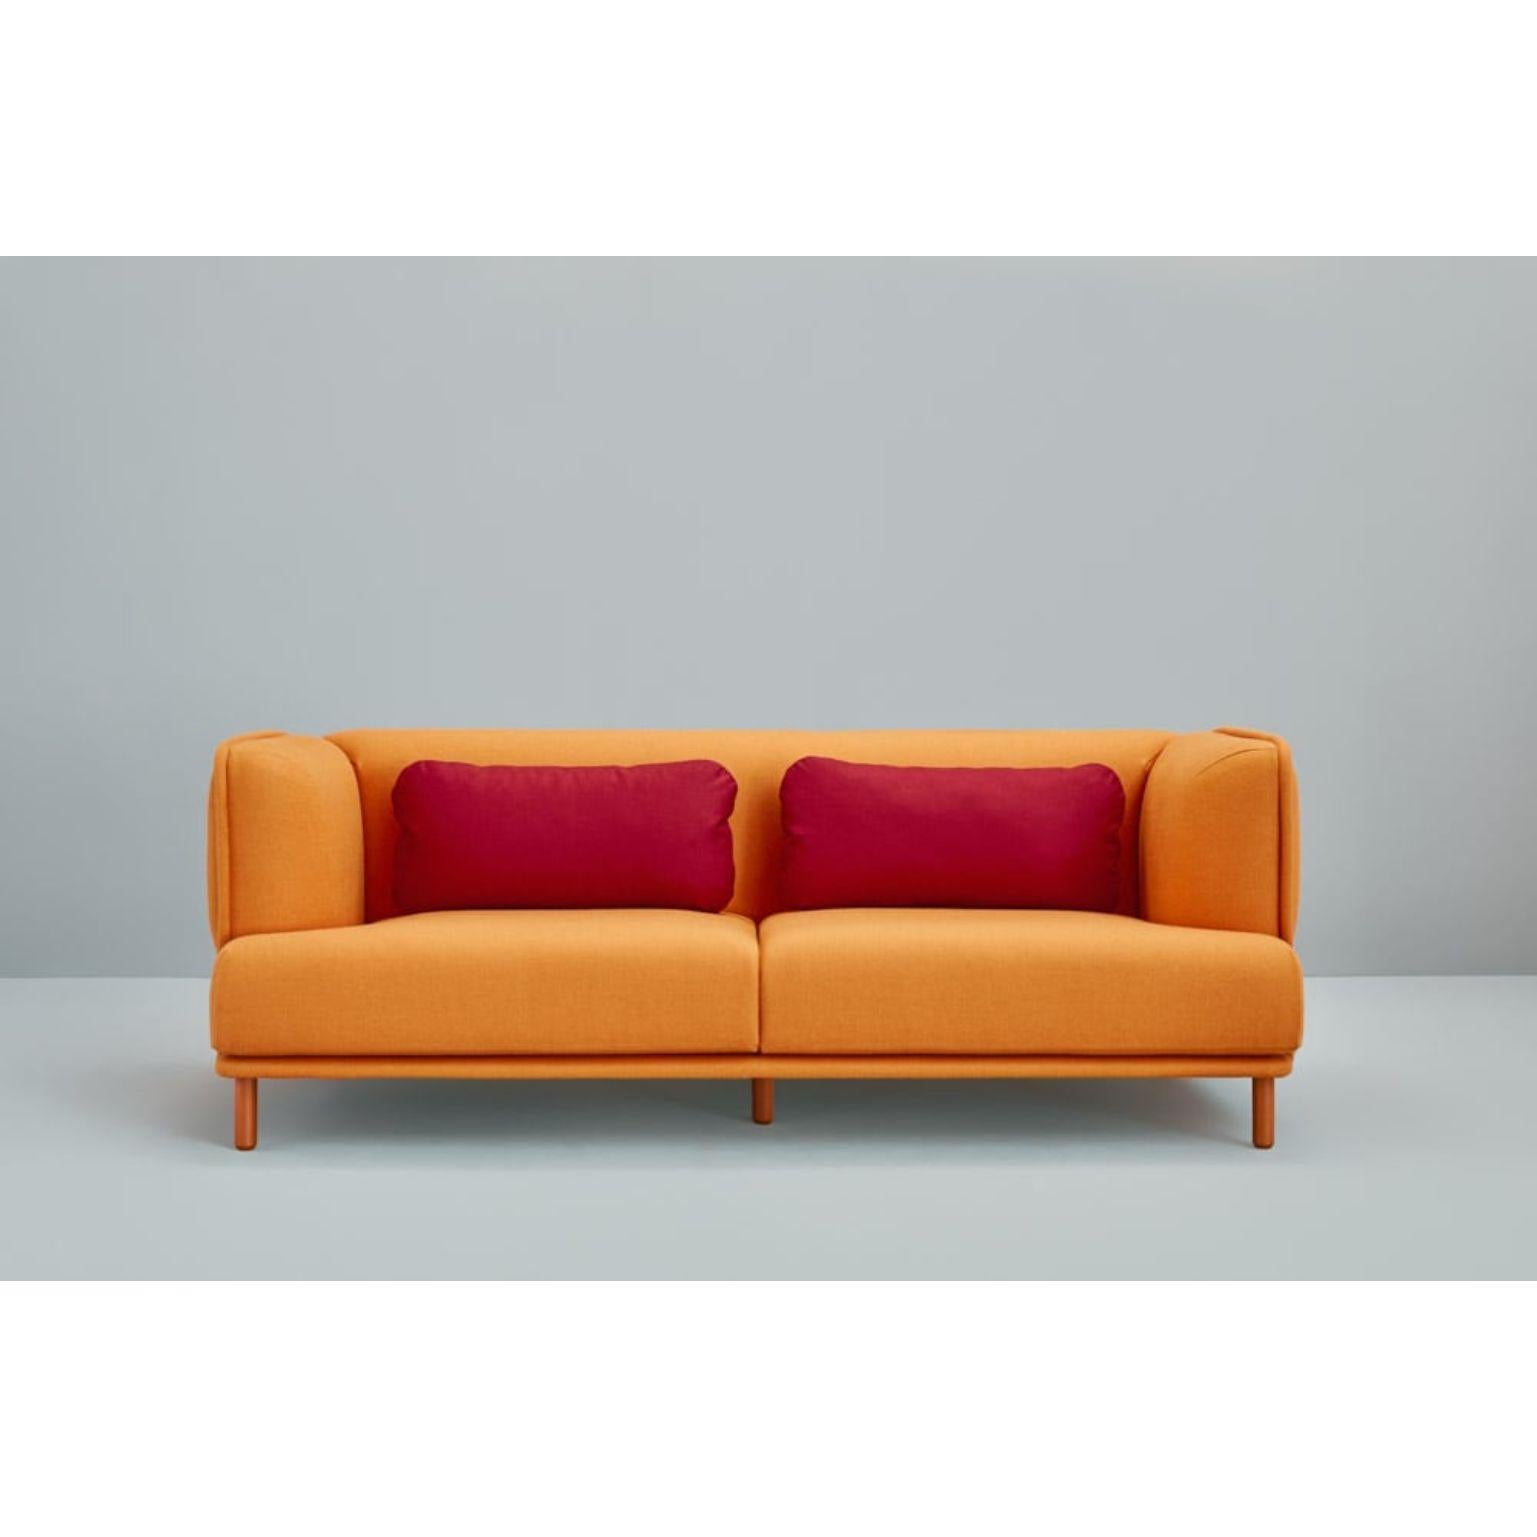 Post-Modern Hug Sofa, 3 Seaters by Cristian Reyes